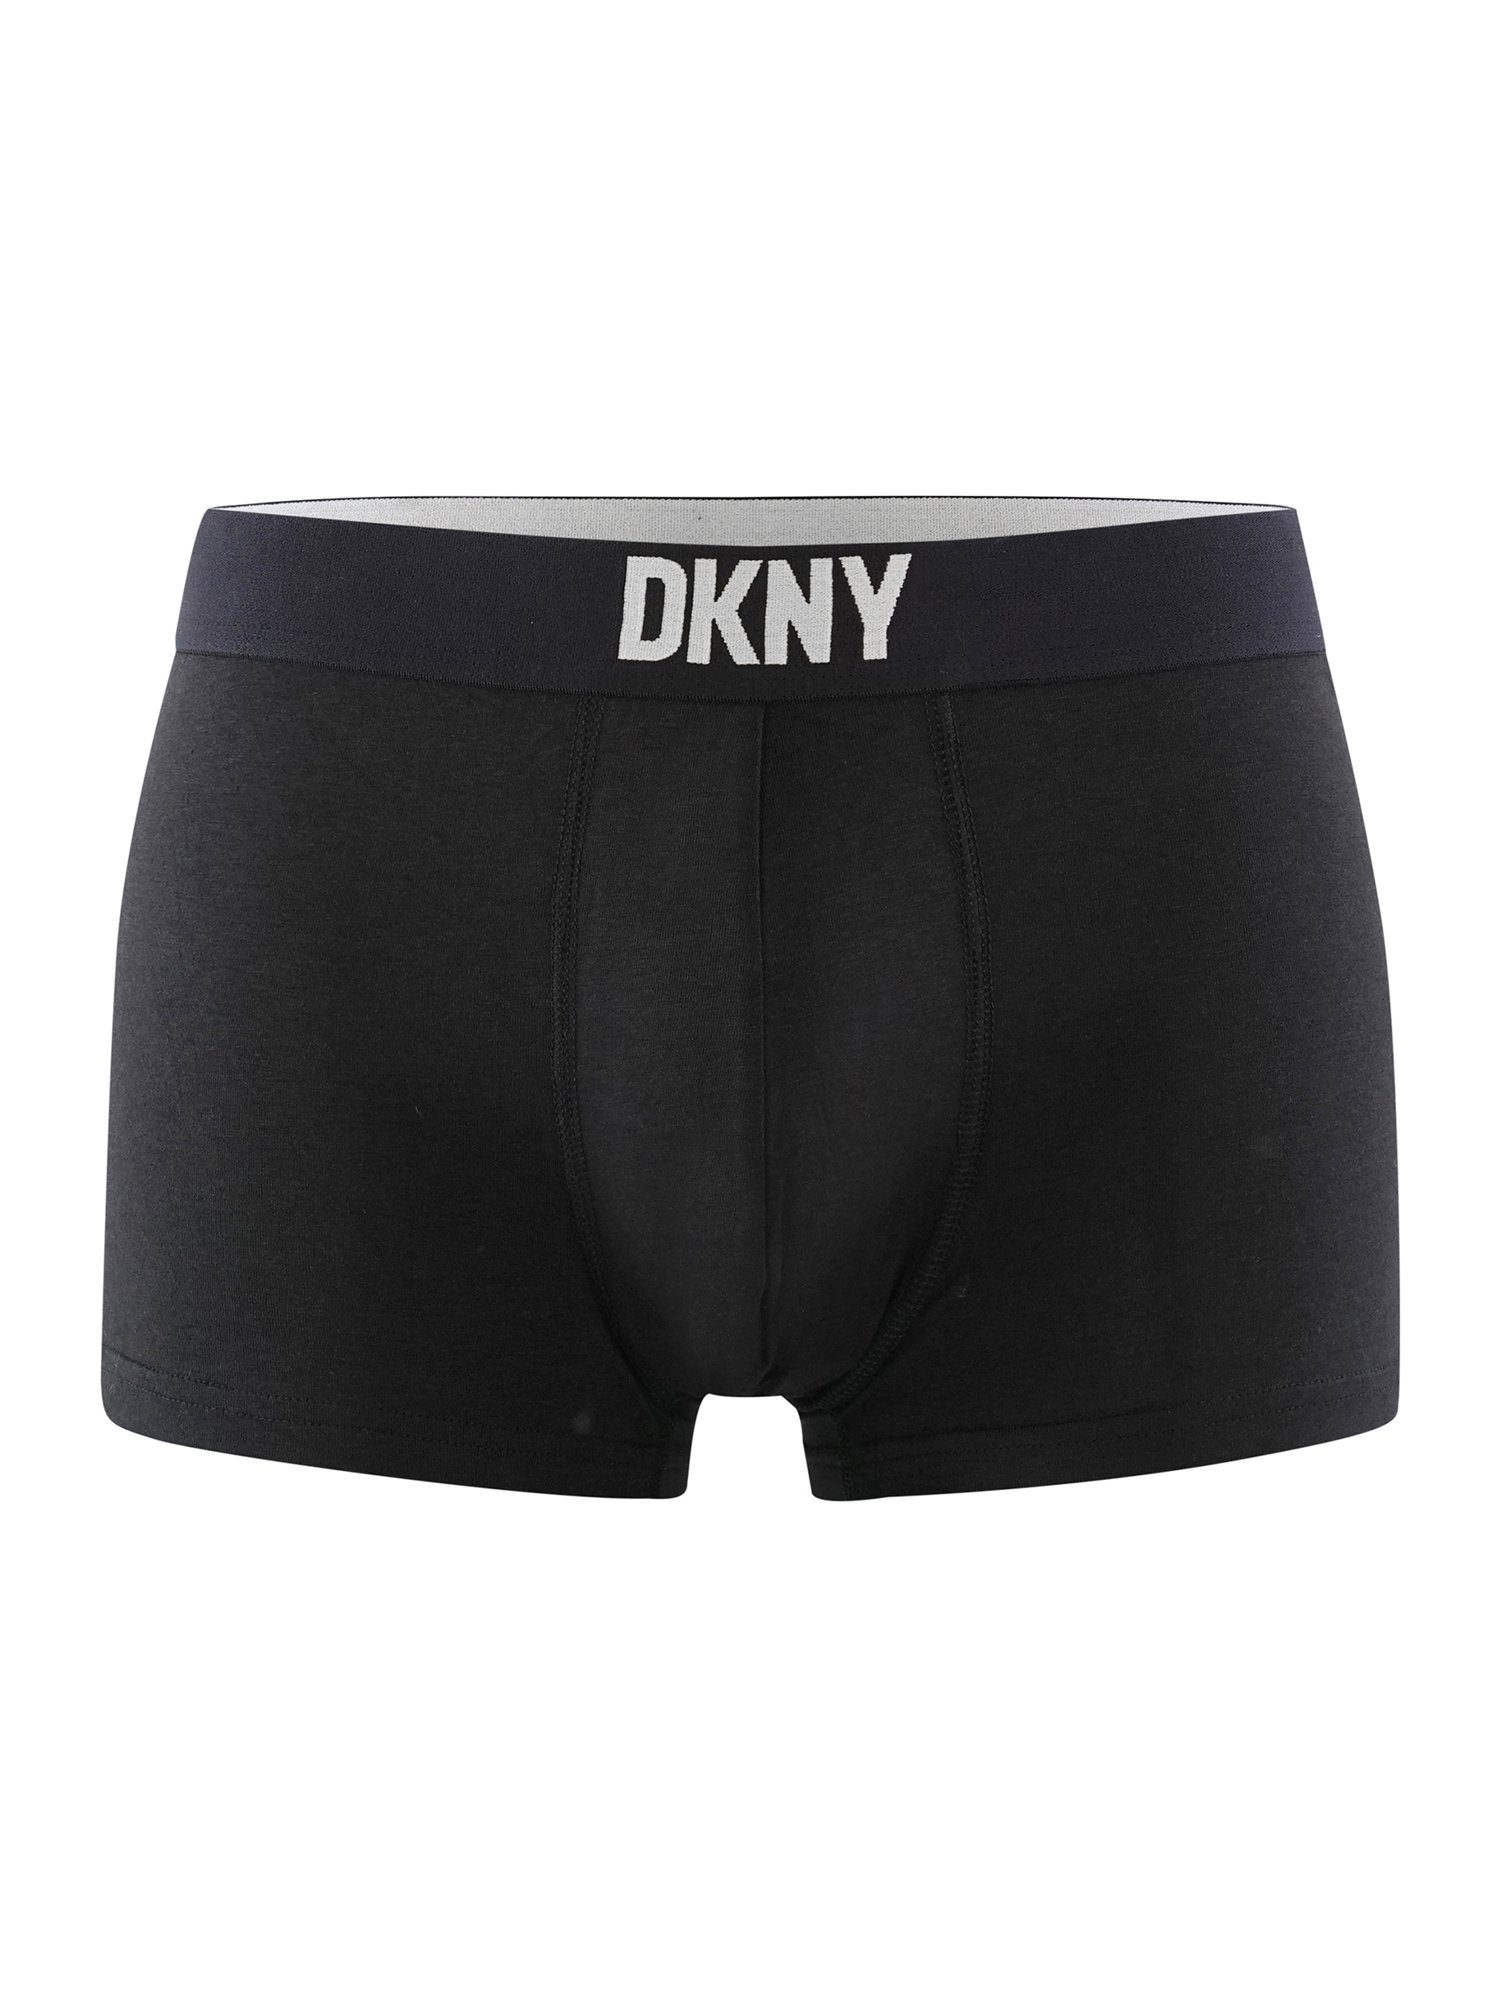 DKNY Trunk NEW YORK boxershort männer unterhose (6-St)